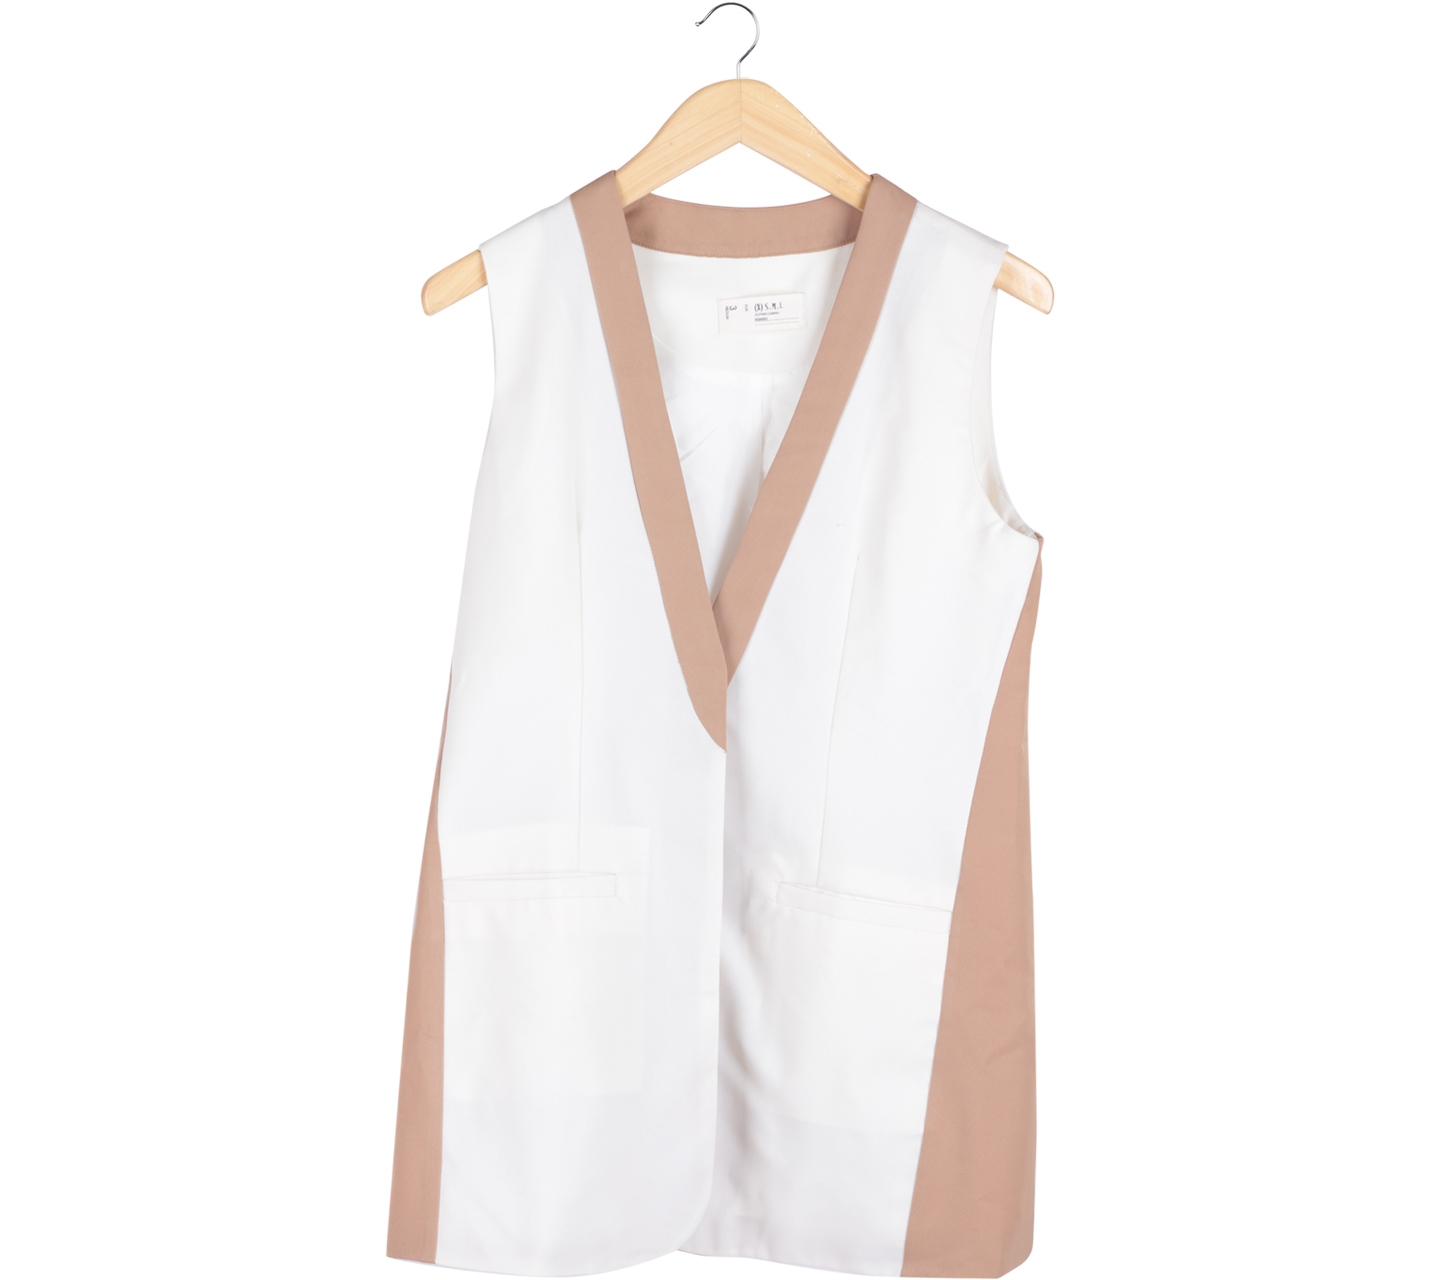 (X)SML White And Brown Vest